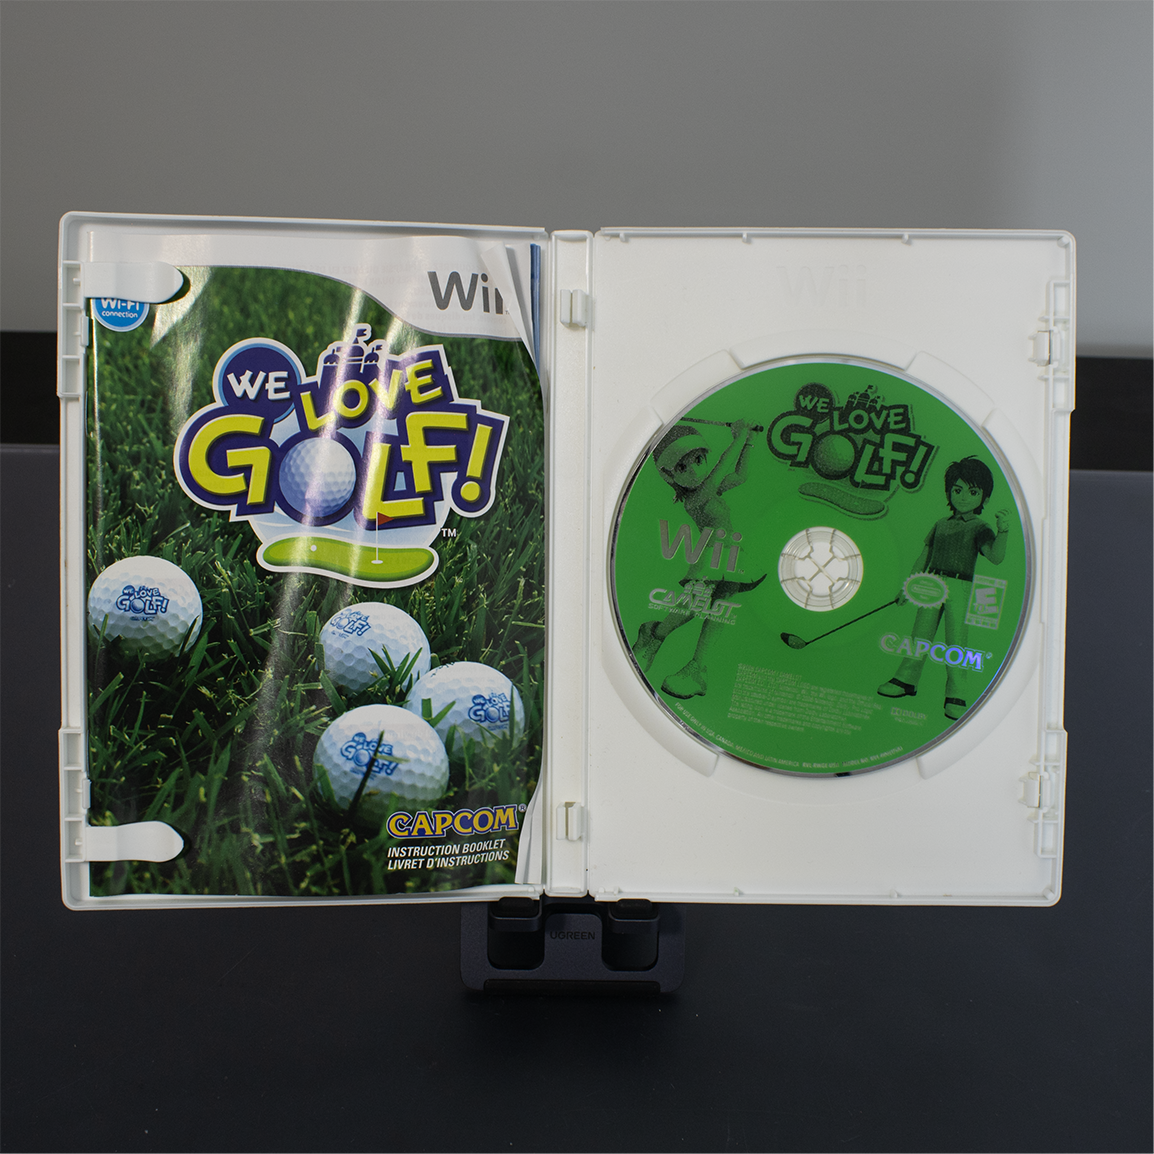 We Love Golf - Wii Game